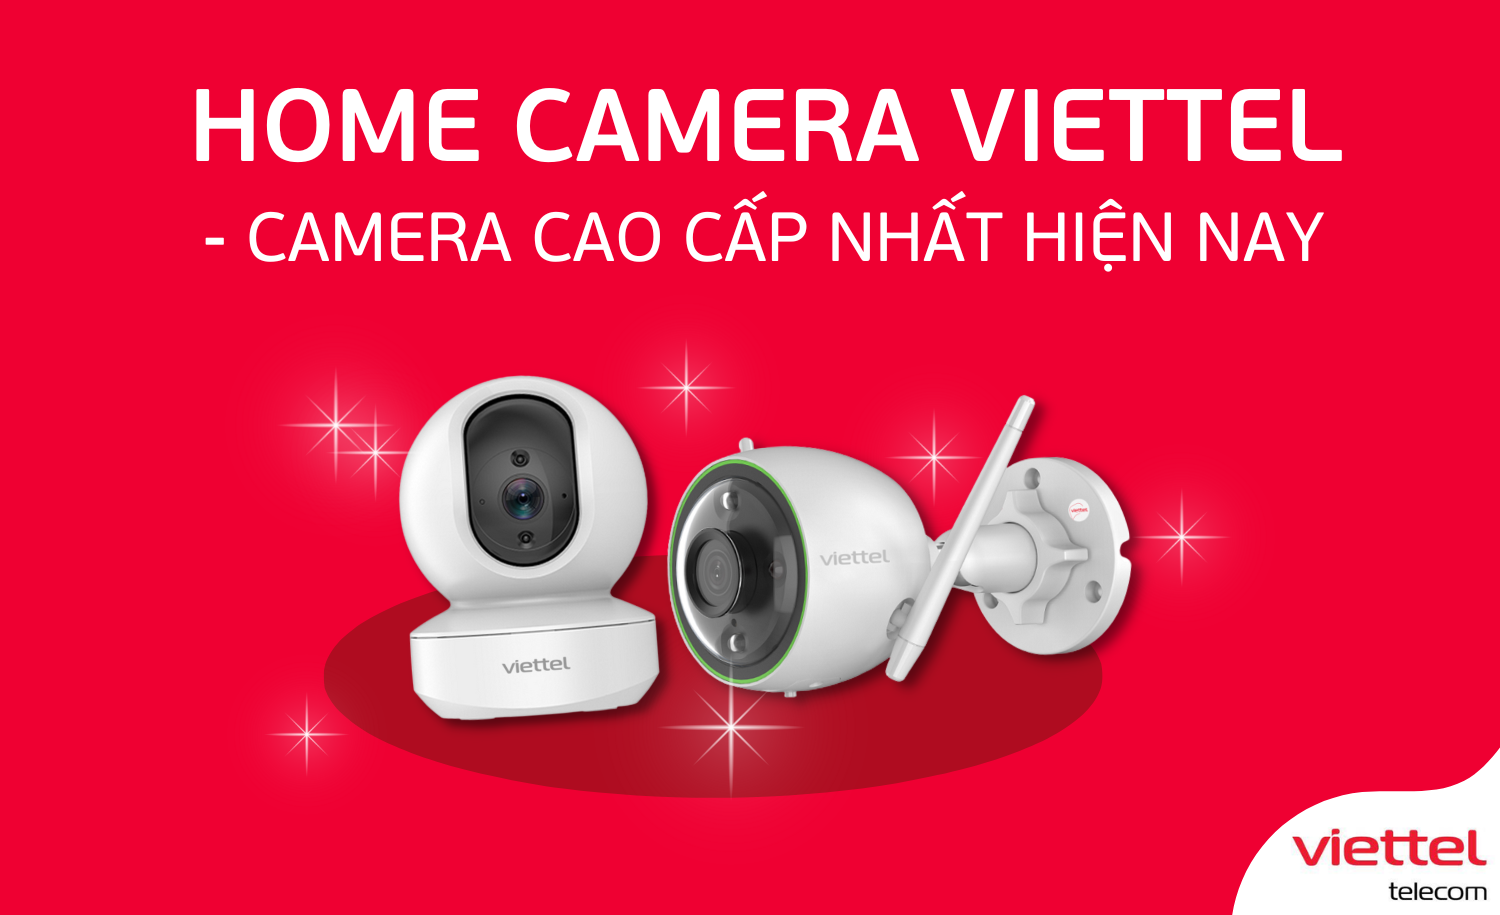 Home Camera Viettel - Camera cao cấp nhất hiện nay